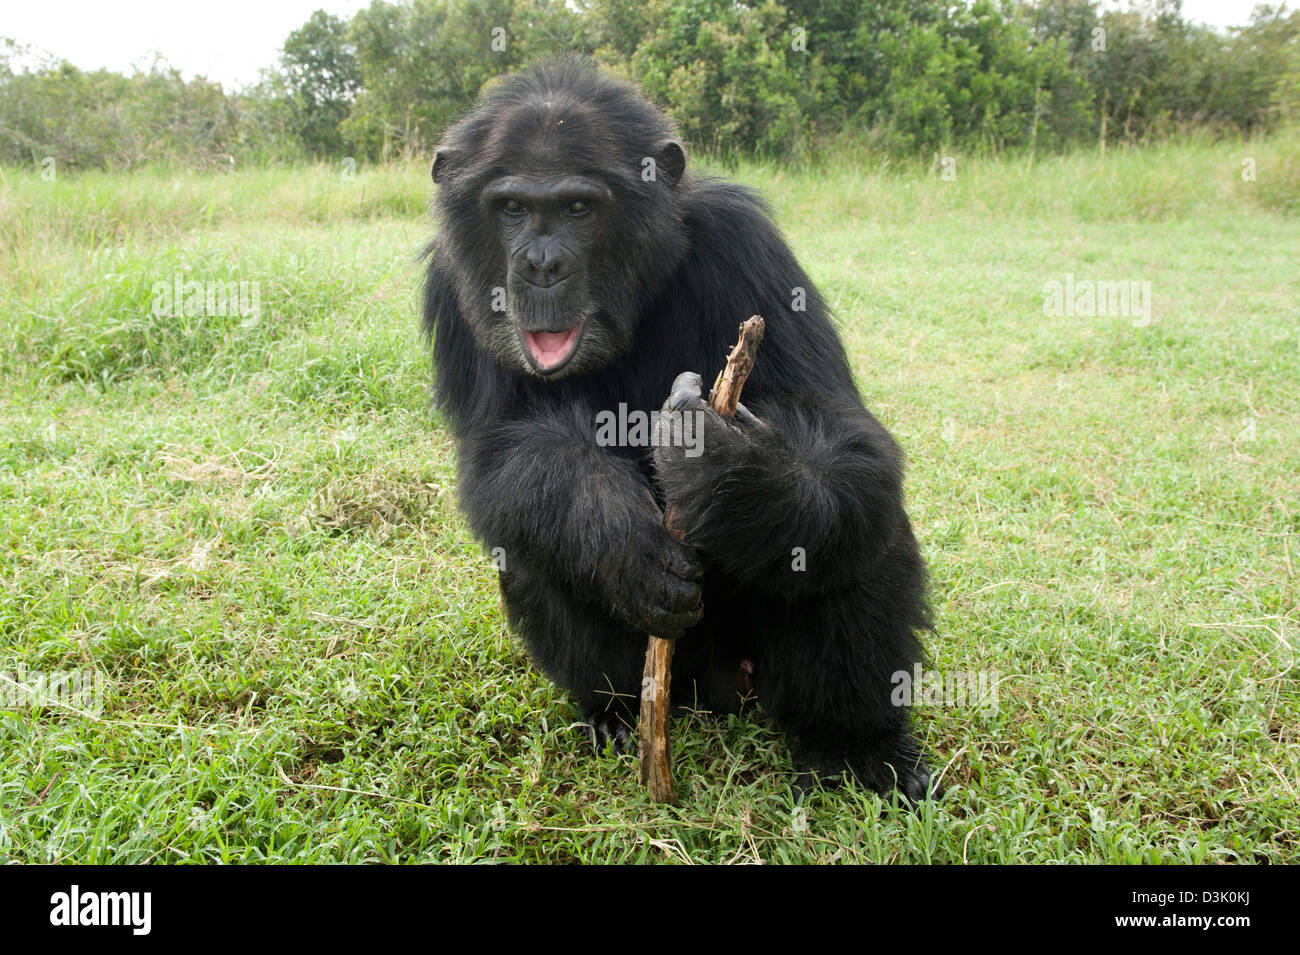 Chimpanzee, Pan troglodytes  , Sweetwaters Chimpanzee Sanctuary, Ol Pejeta Wildlife Conservancy, Laikipia, Kenya Stock Photo